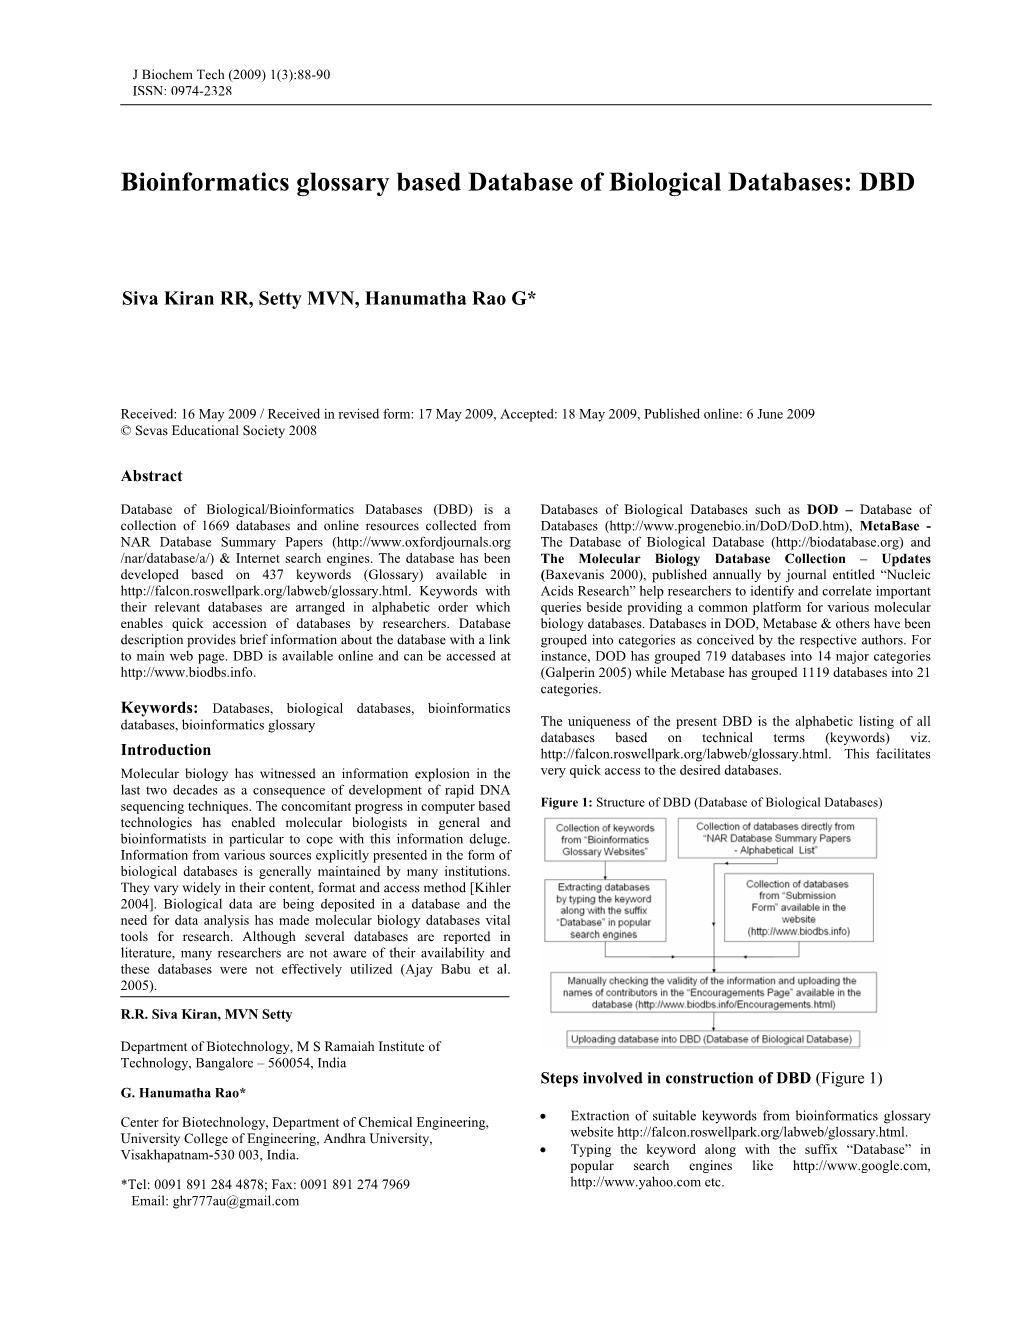 Bioinformatics Glossary Based Database of Biological Databases: DBD